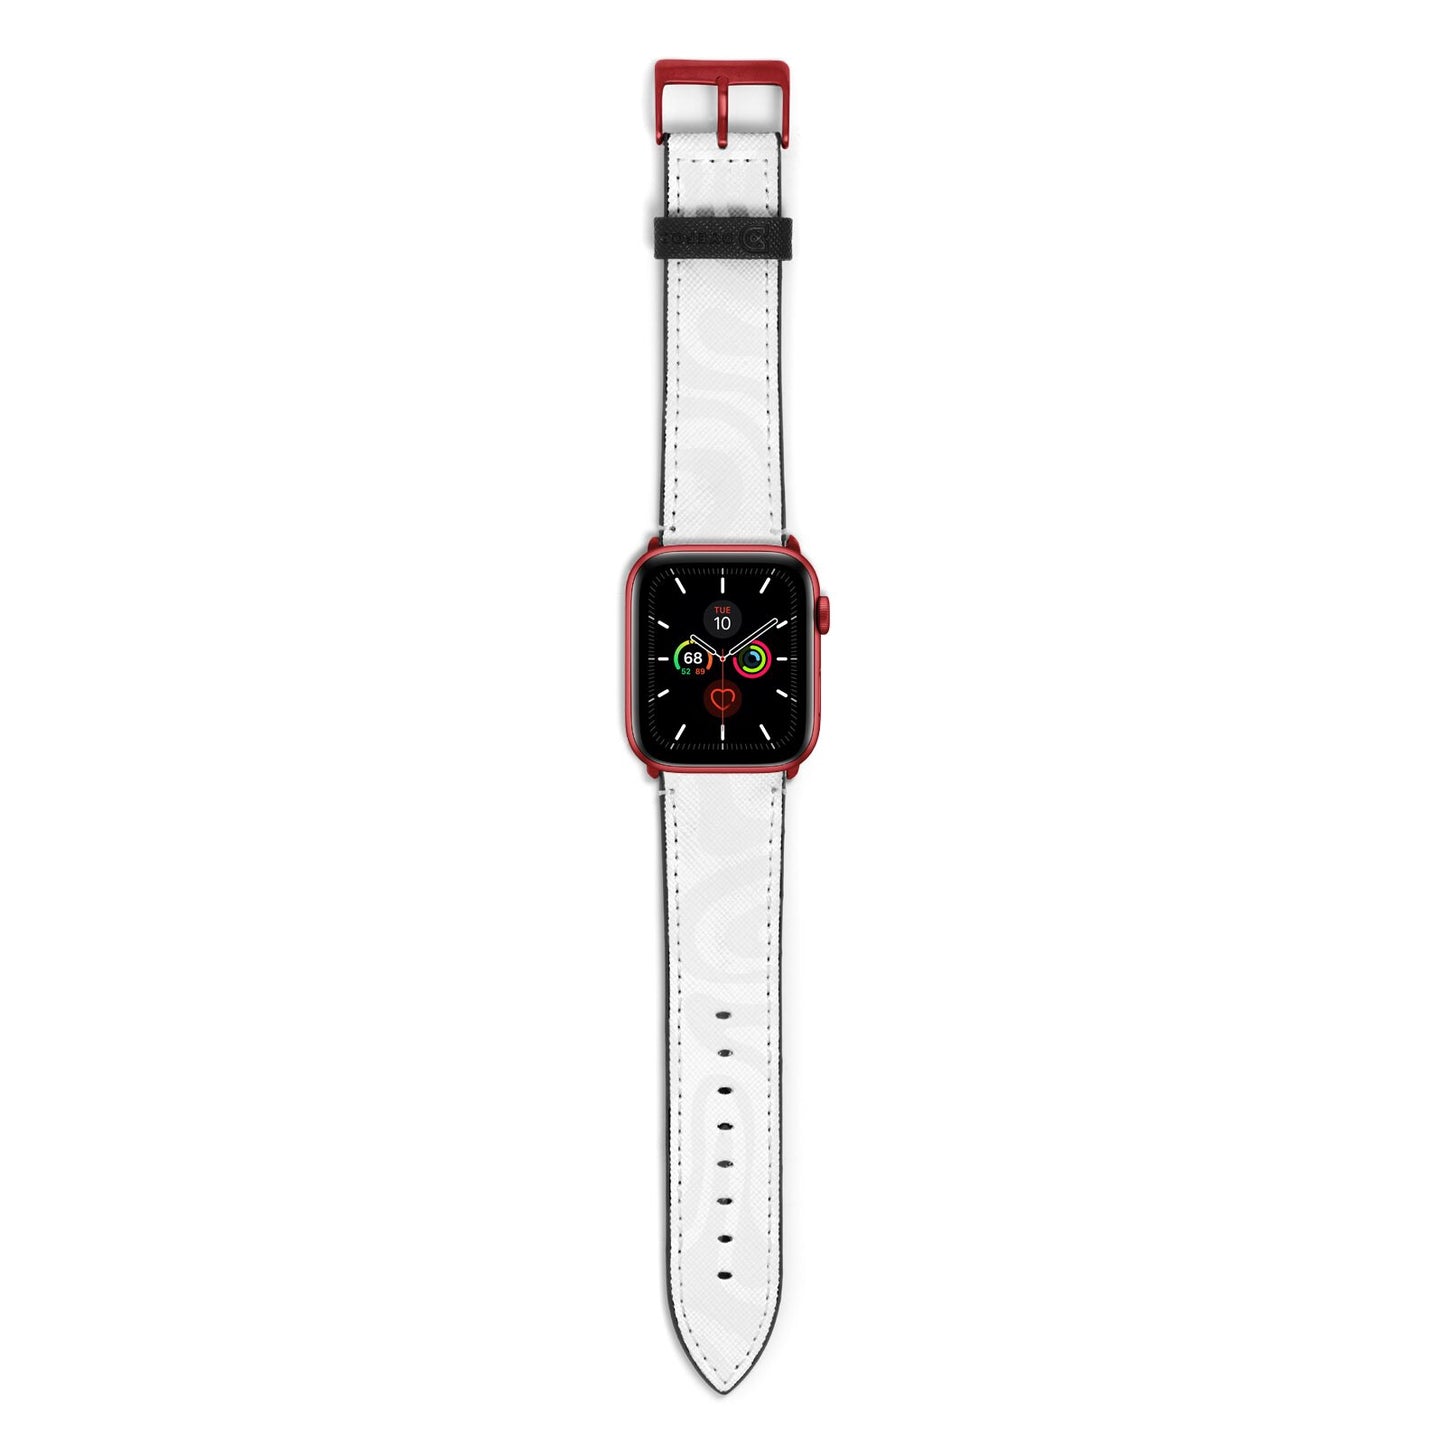 White Swirl Apple Watch Strap with Red Hardware